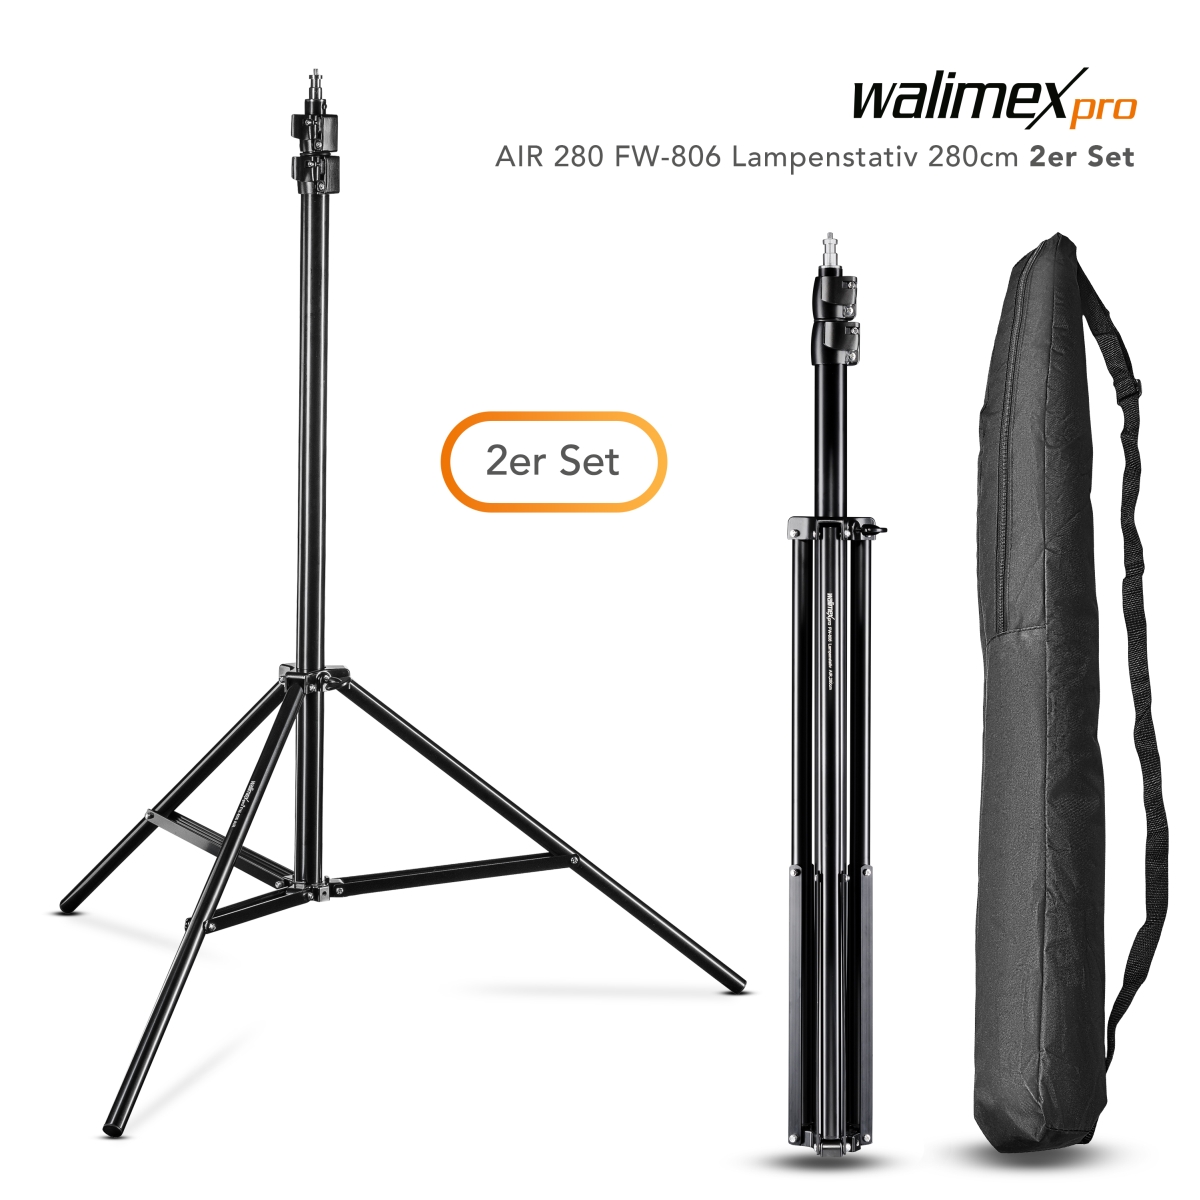 Walimex pro AIR 280 FW-806 Lampenst. 280cm 2er Set